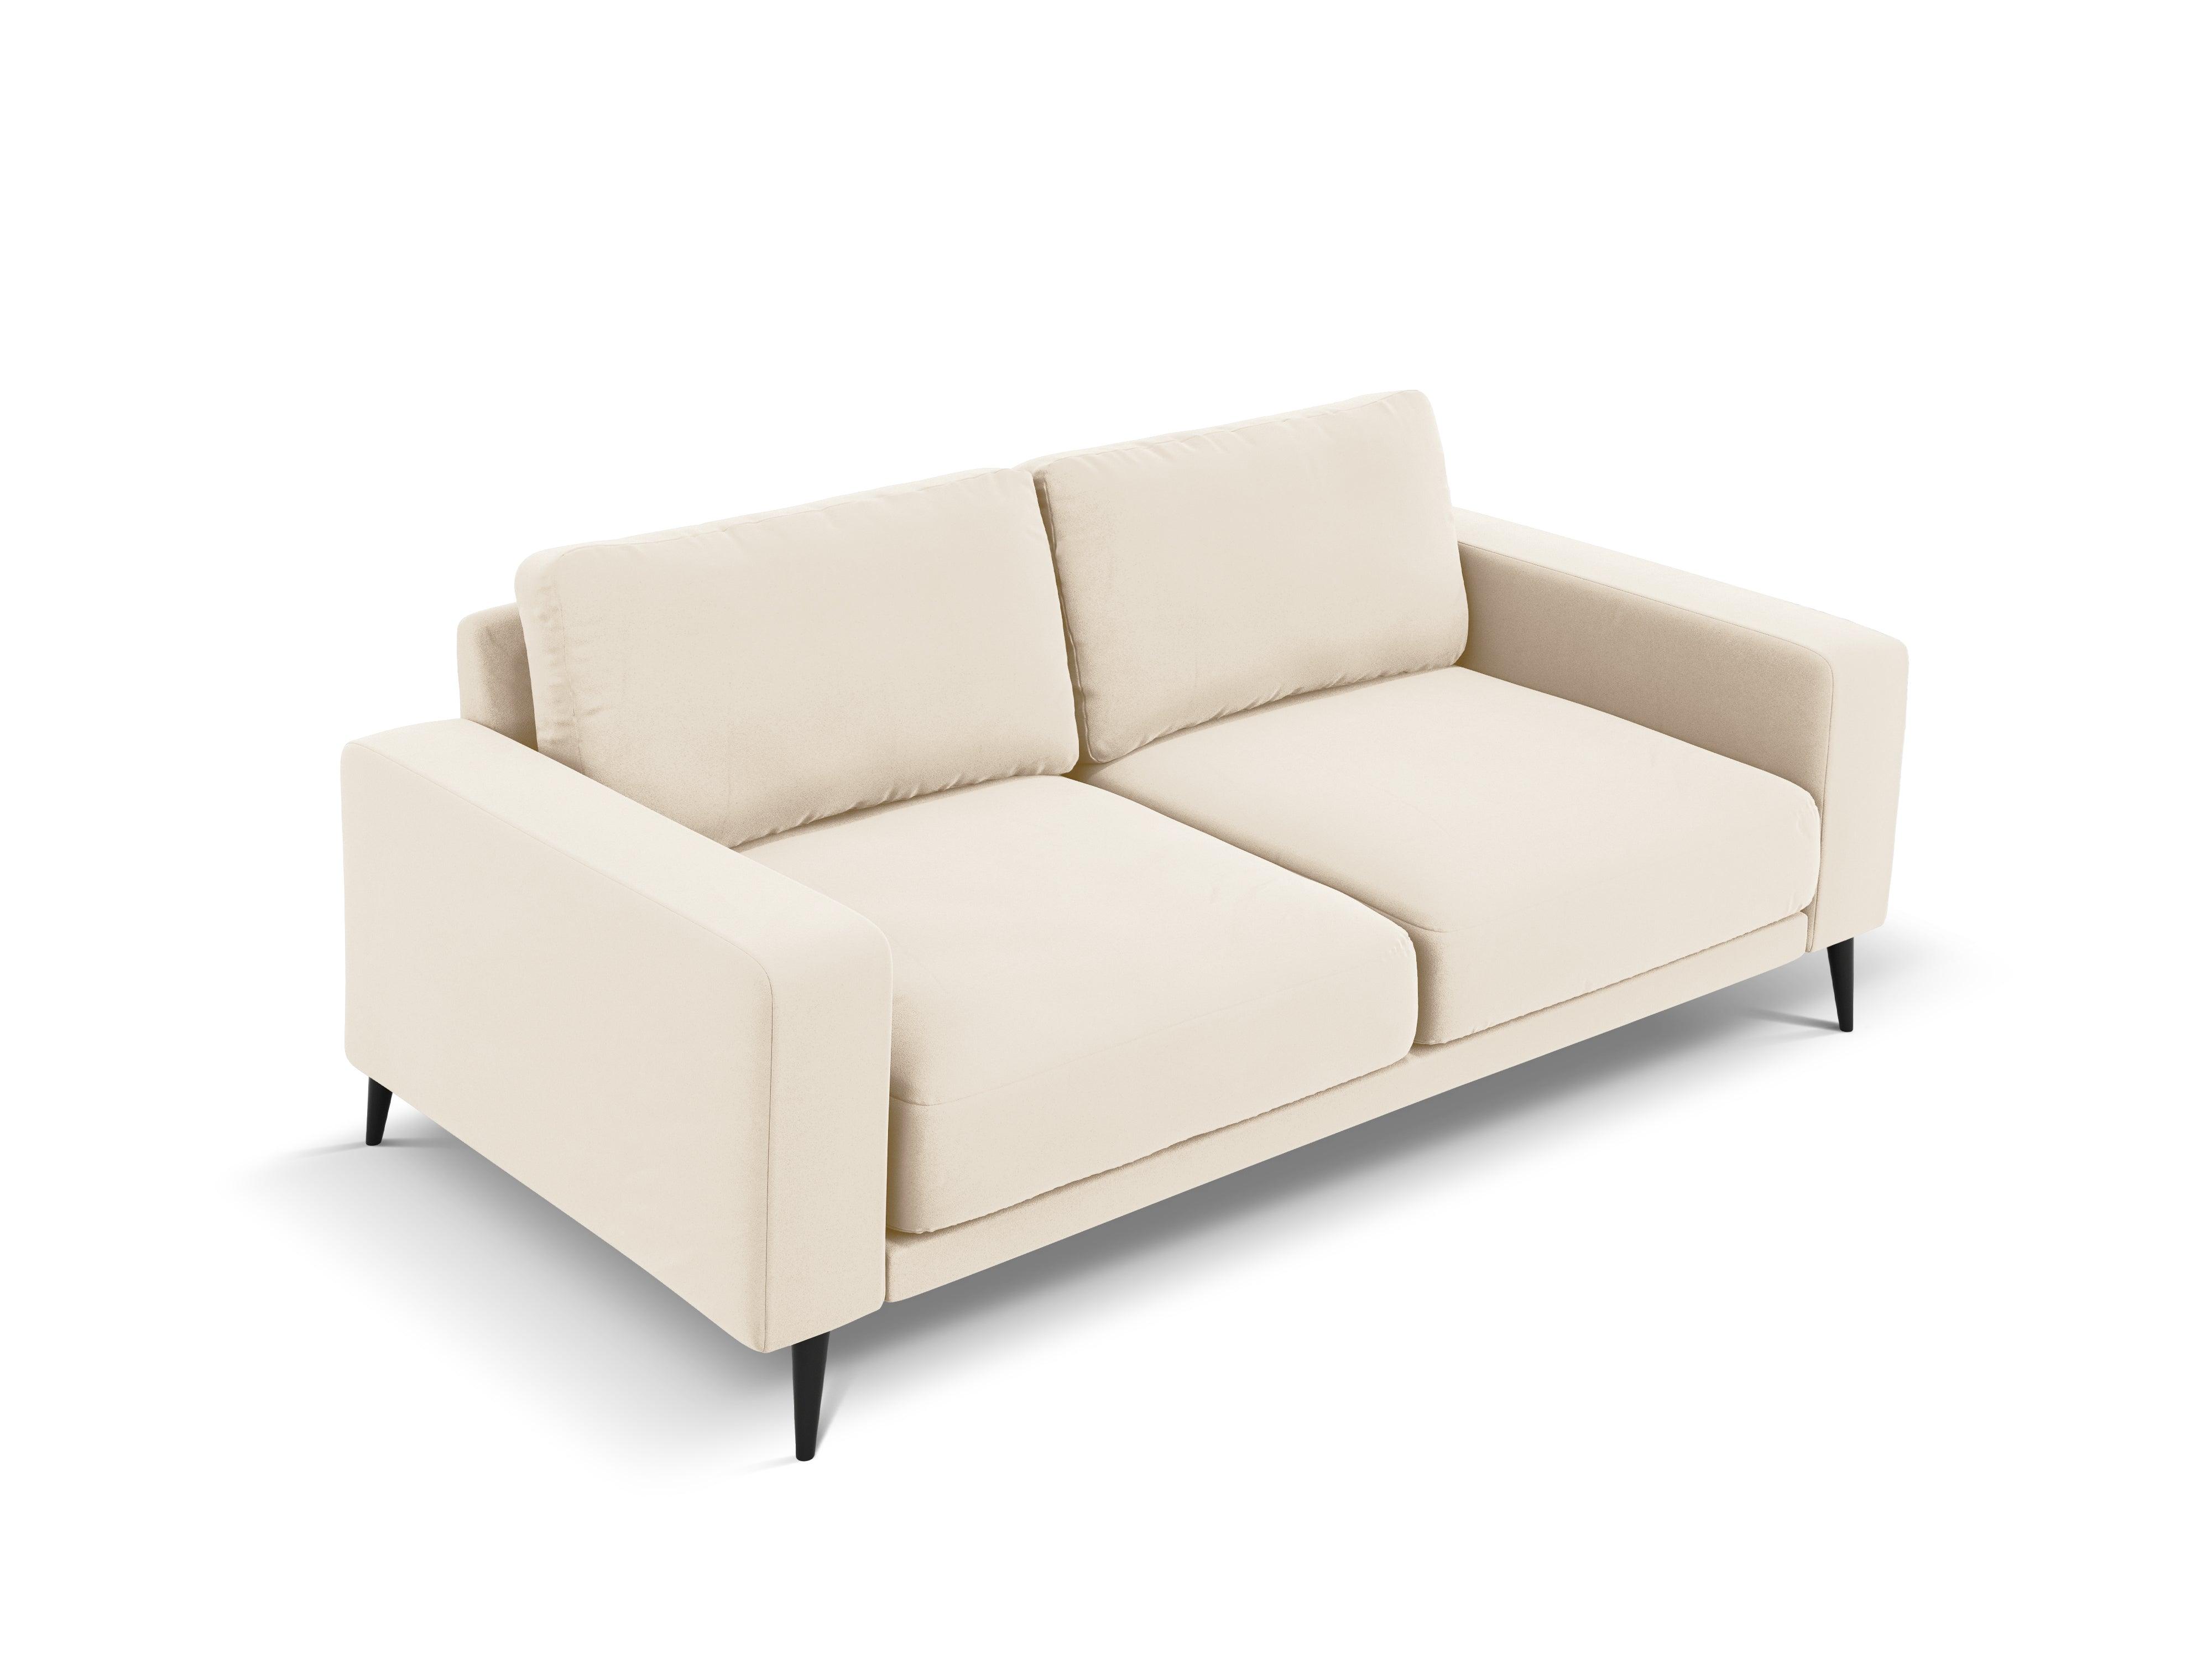 Velvet Sofa, "Kylie", 2 Seats, 163x90x80
Made in Europe, Micadoni, Eye on Design